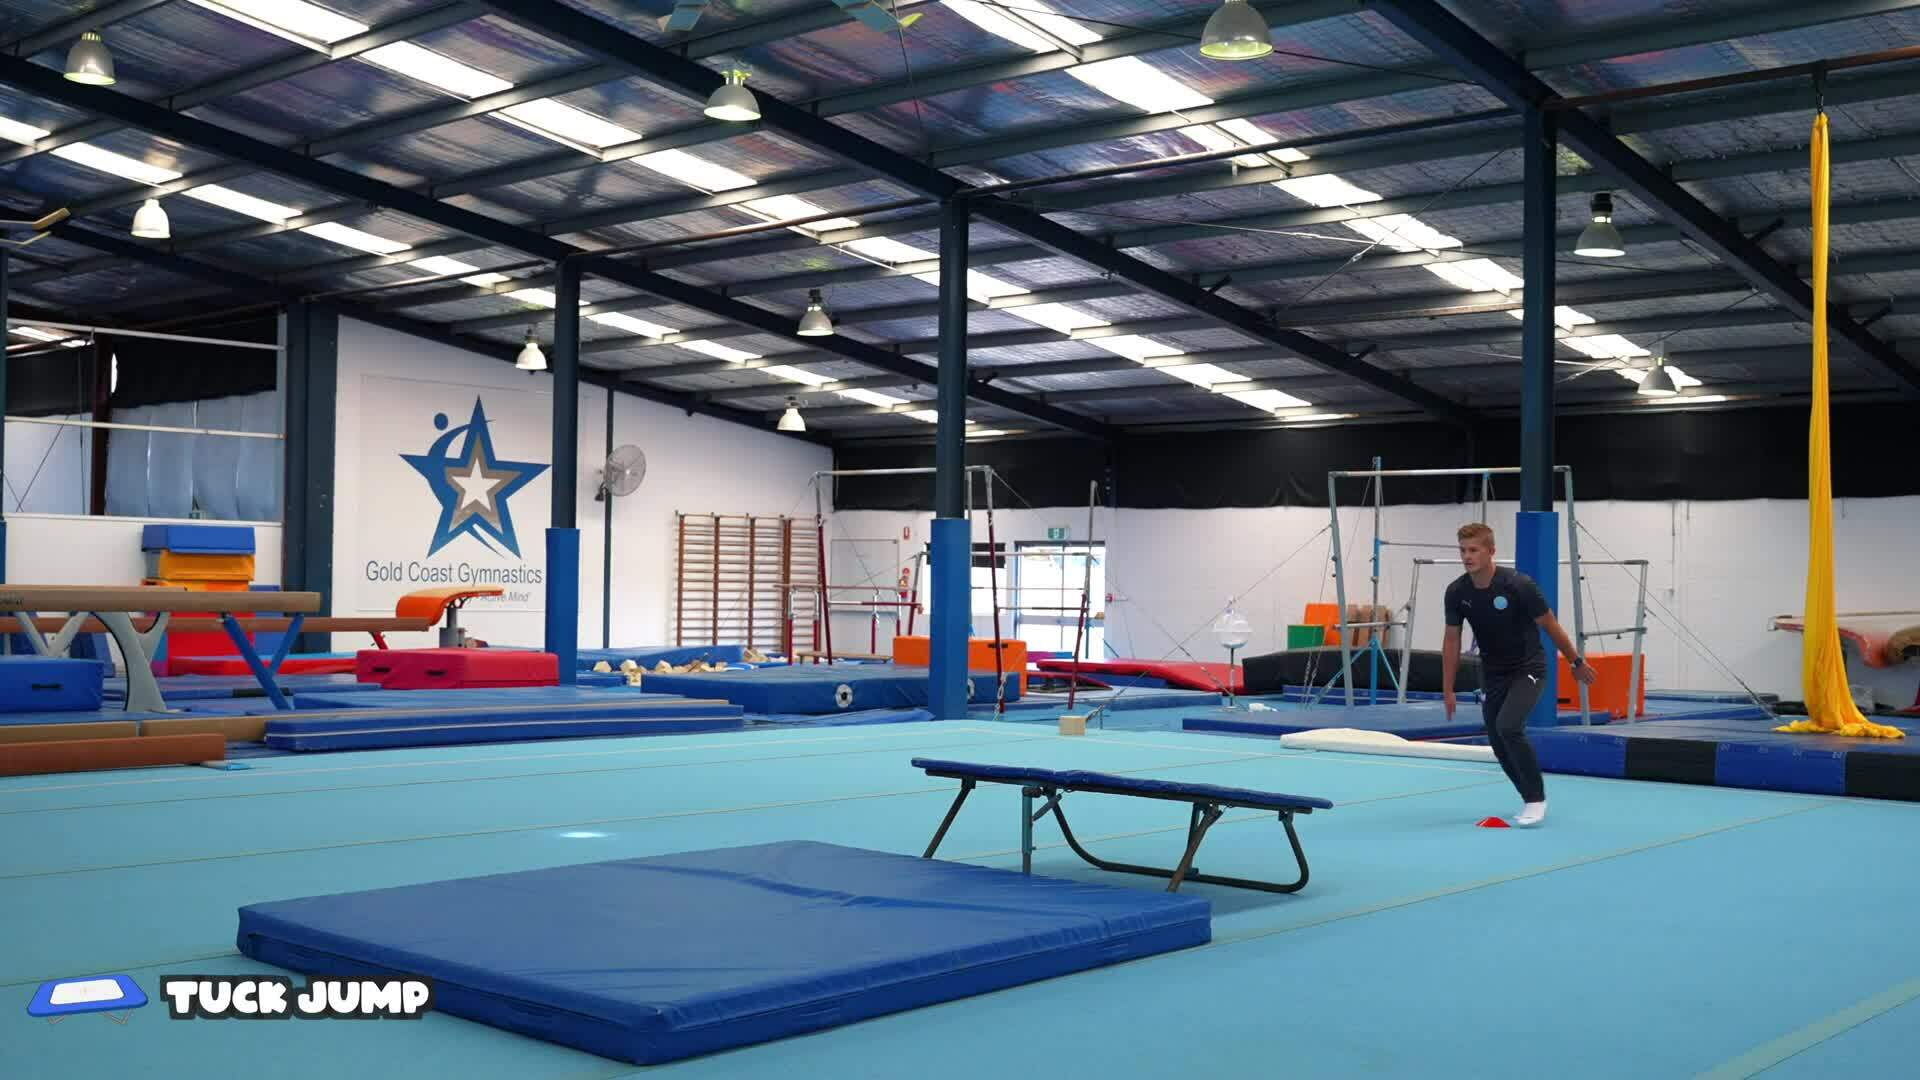 Elementary gymnastics - Mini tramp - 6 tuck jump